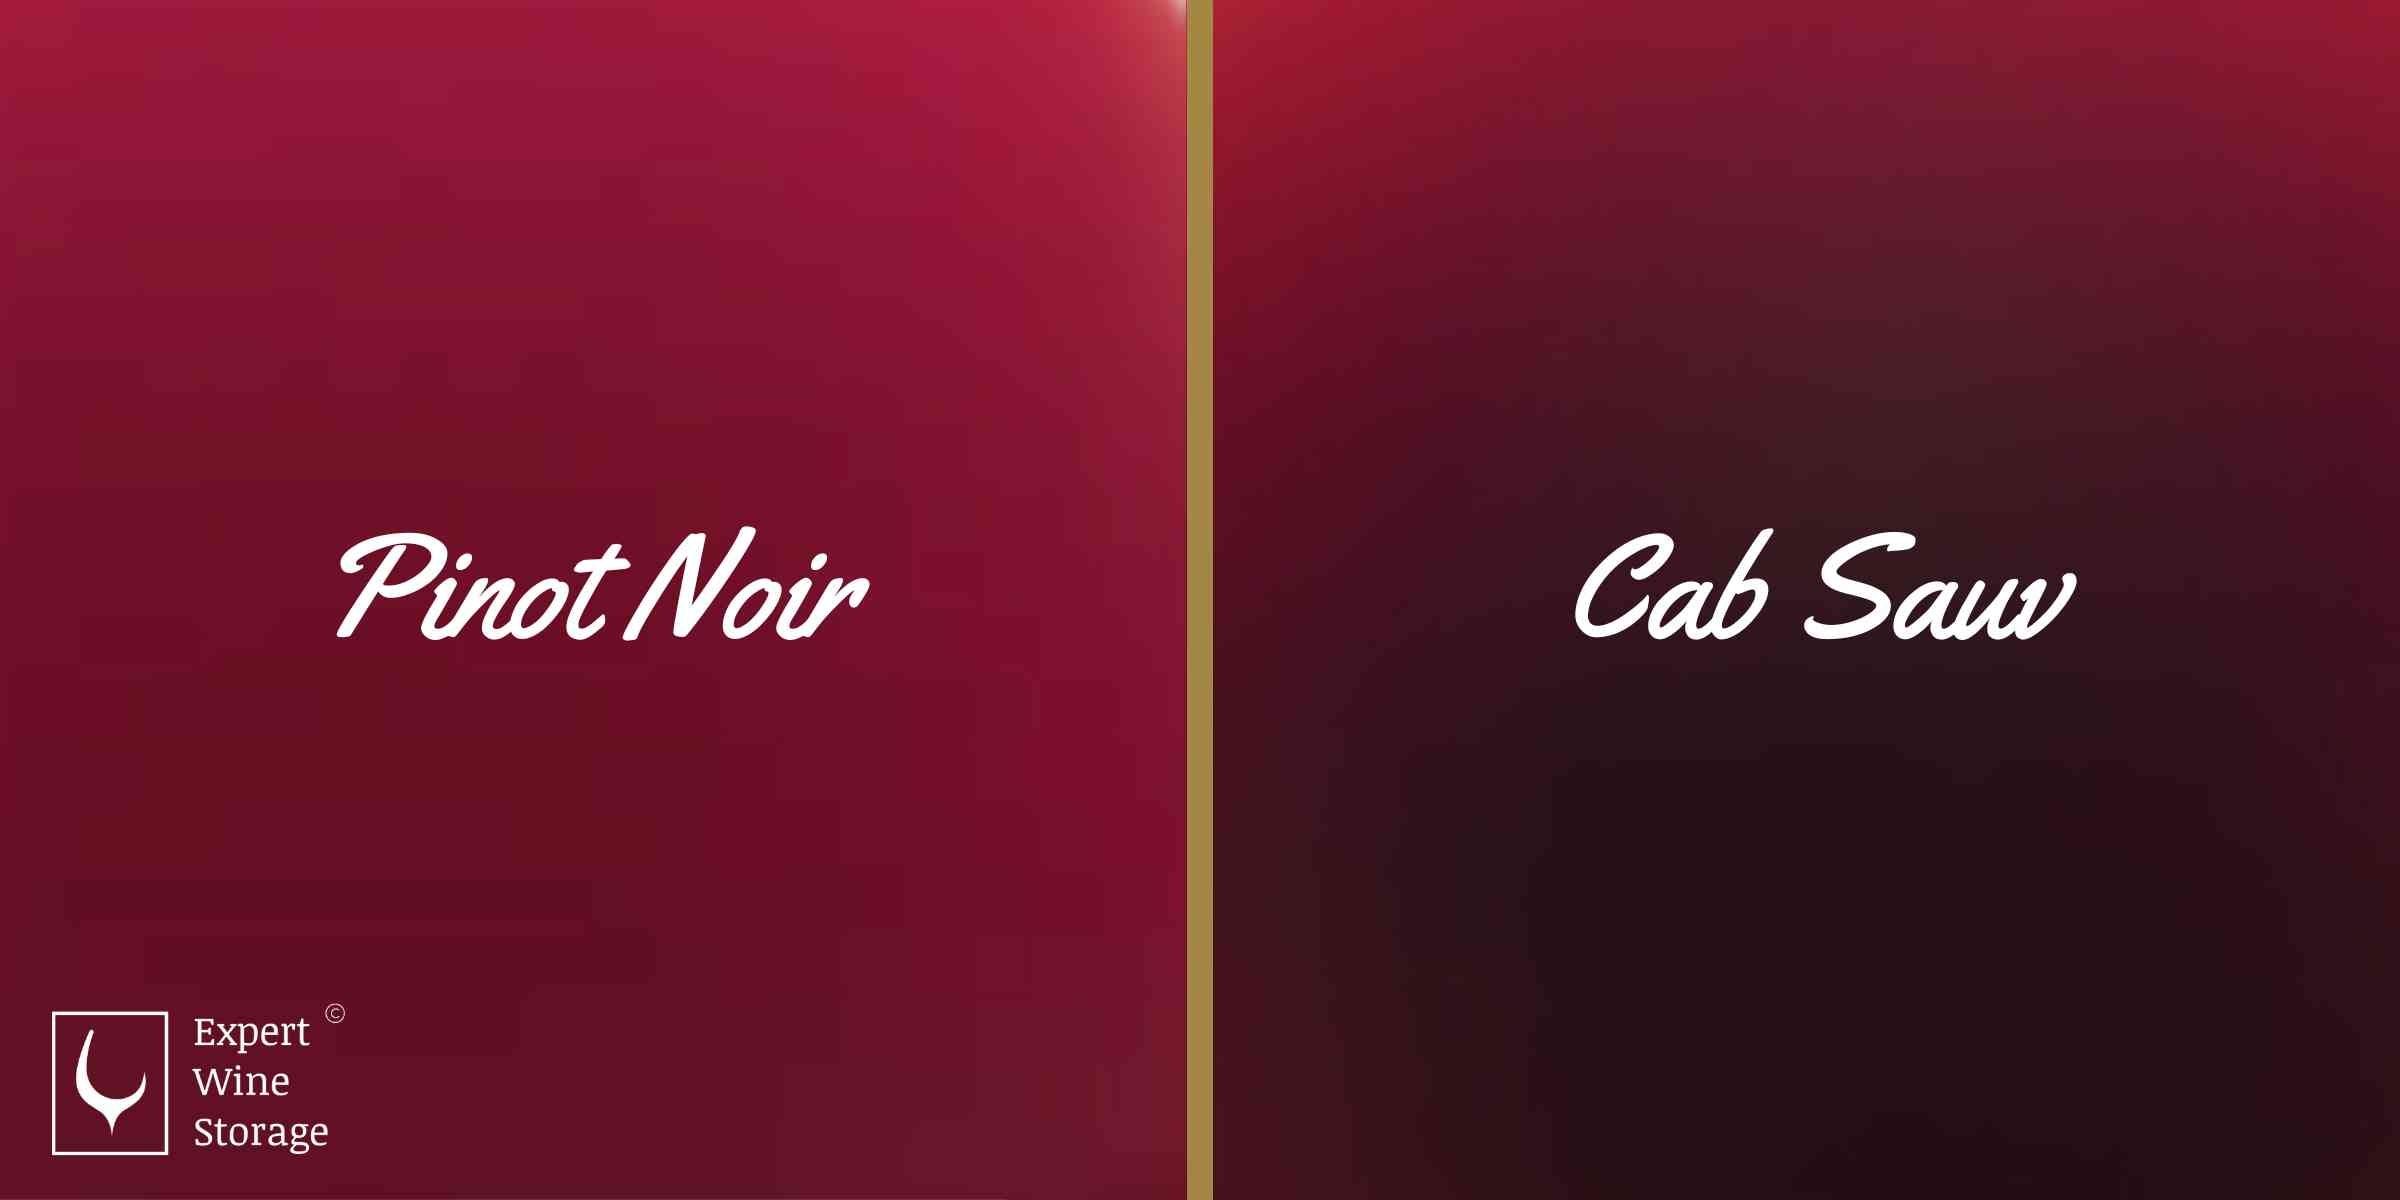 Cab Sav Vs Pinot Noir Appearance